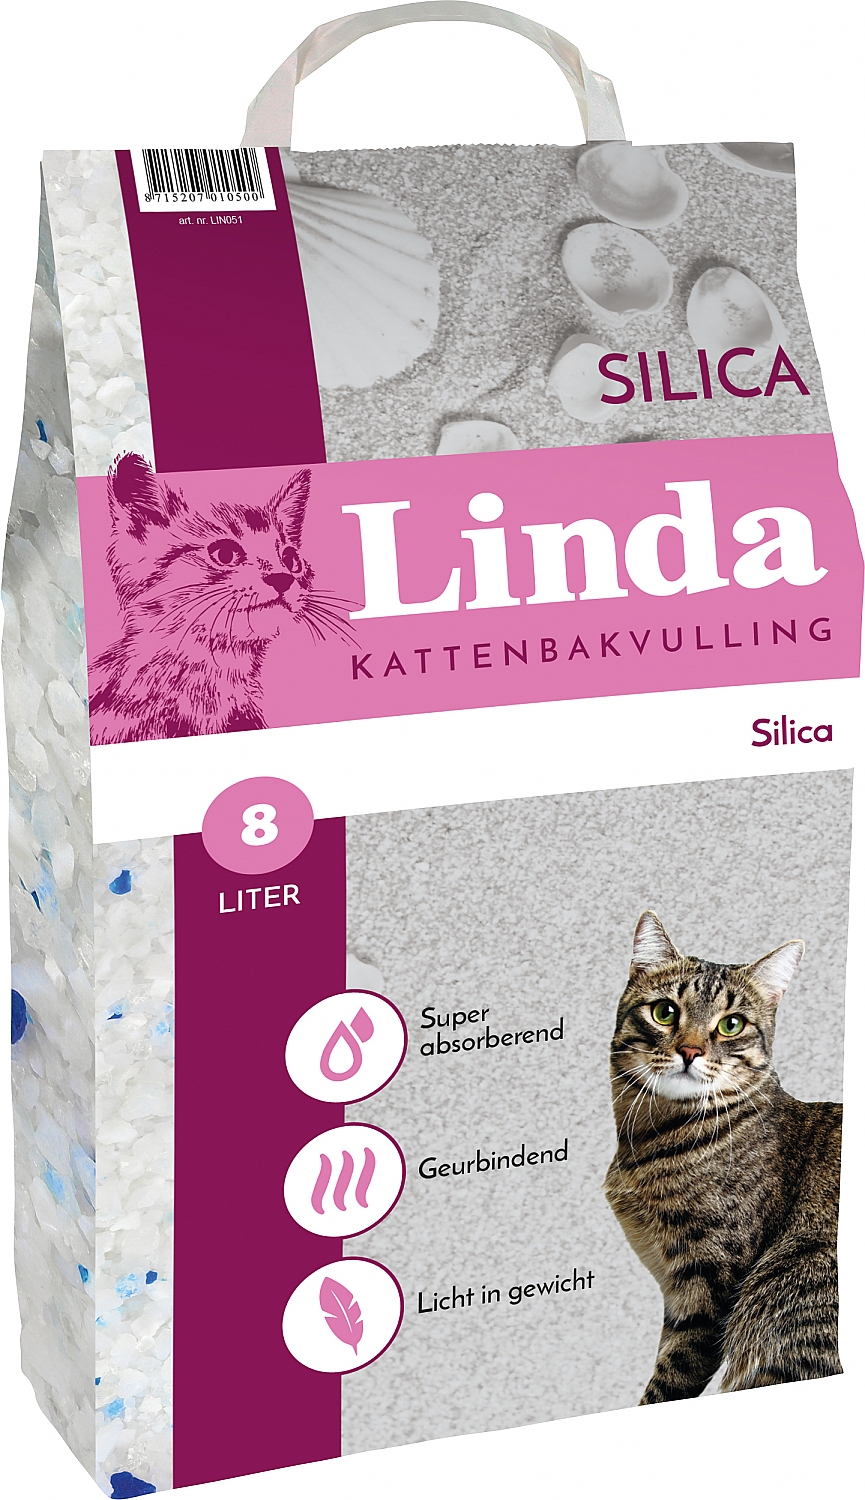 Linda Silica 8 Ltr